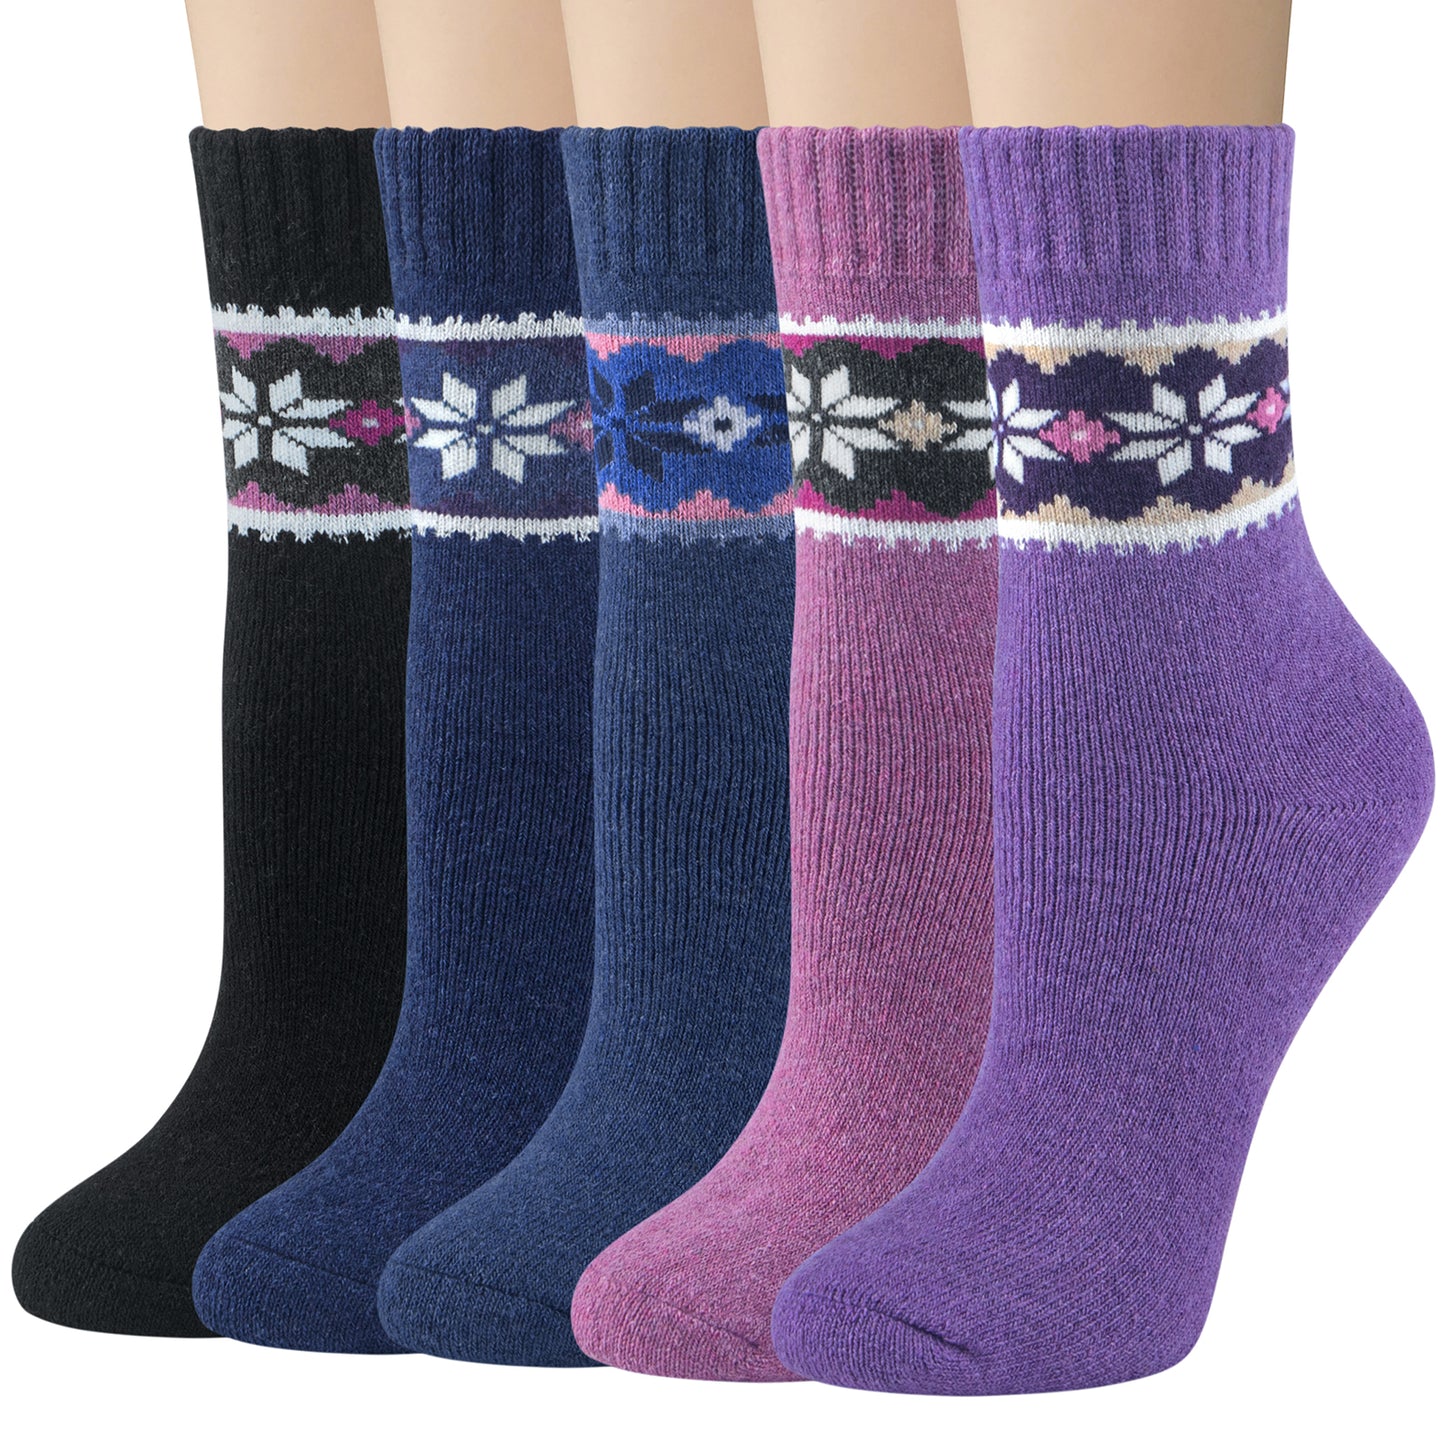 Loritta 5 Pairs Womens Wool Socks Vintage Warm Winter Socks Thick Cozy Socks Knit Casual Crew Socks Gifts for Women